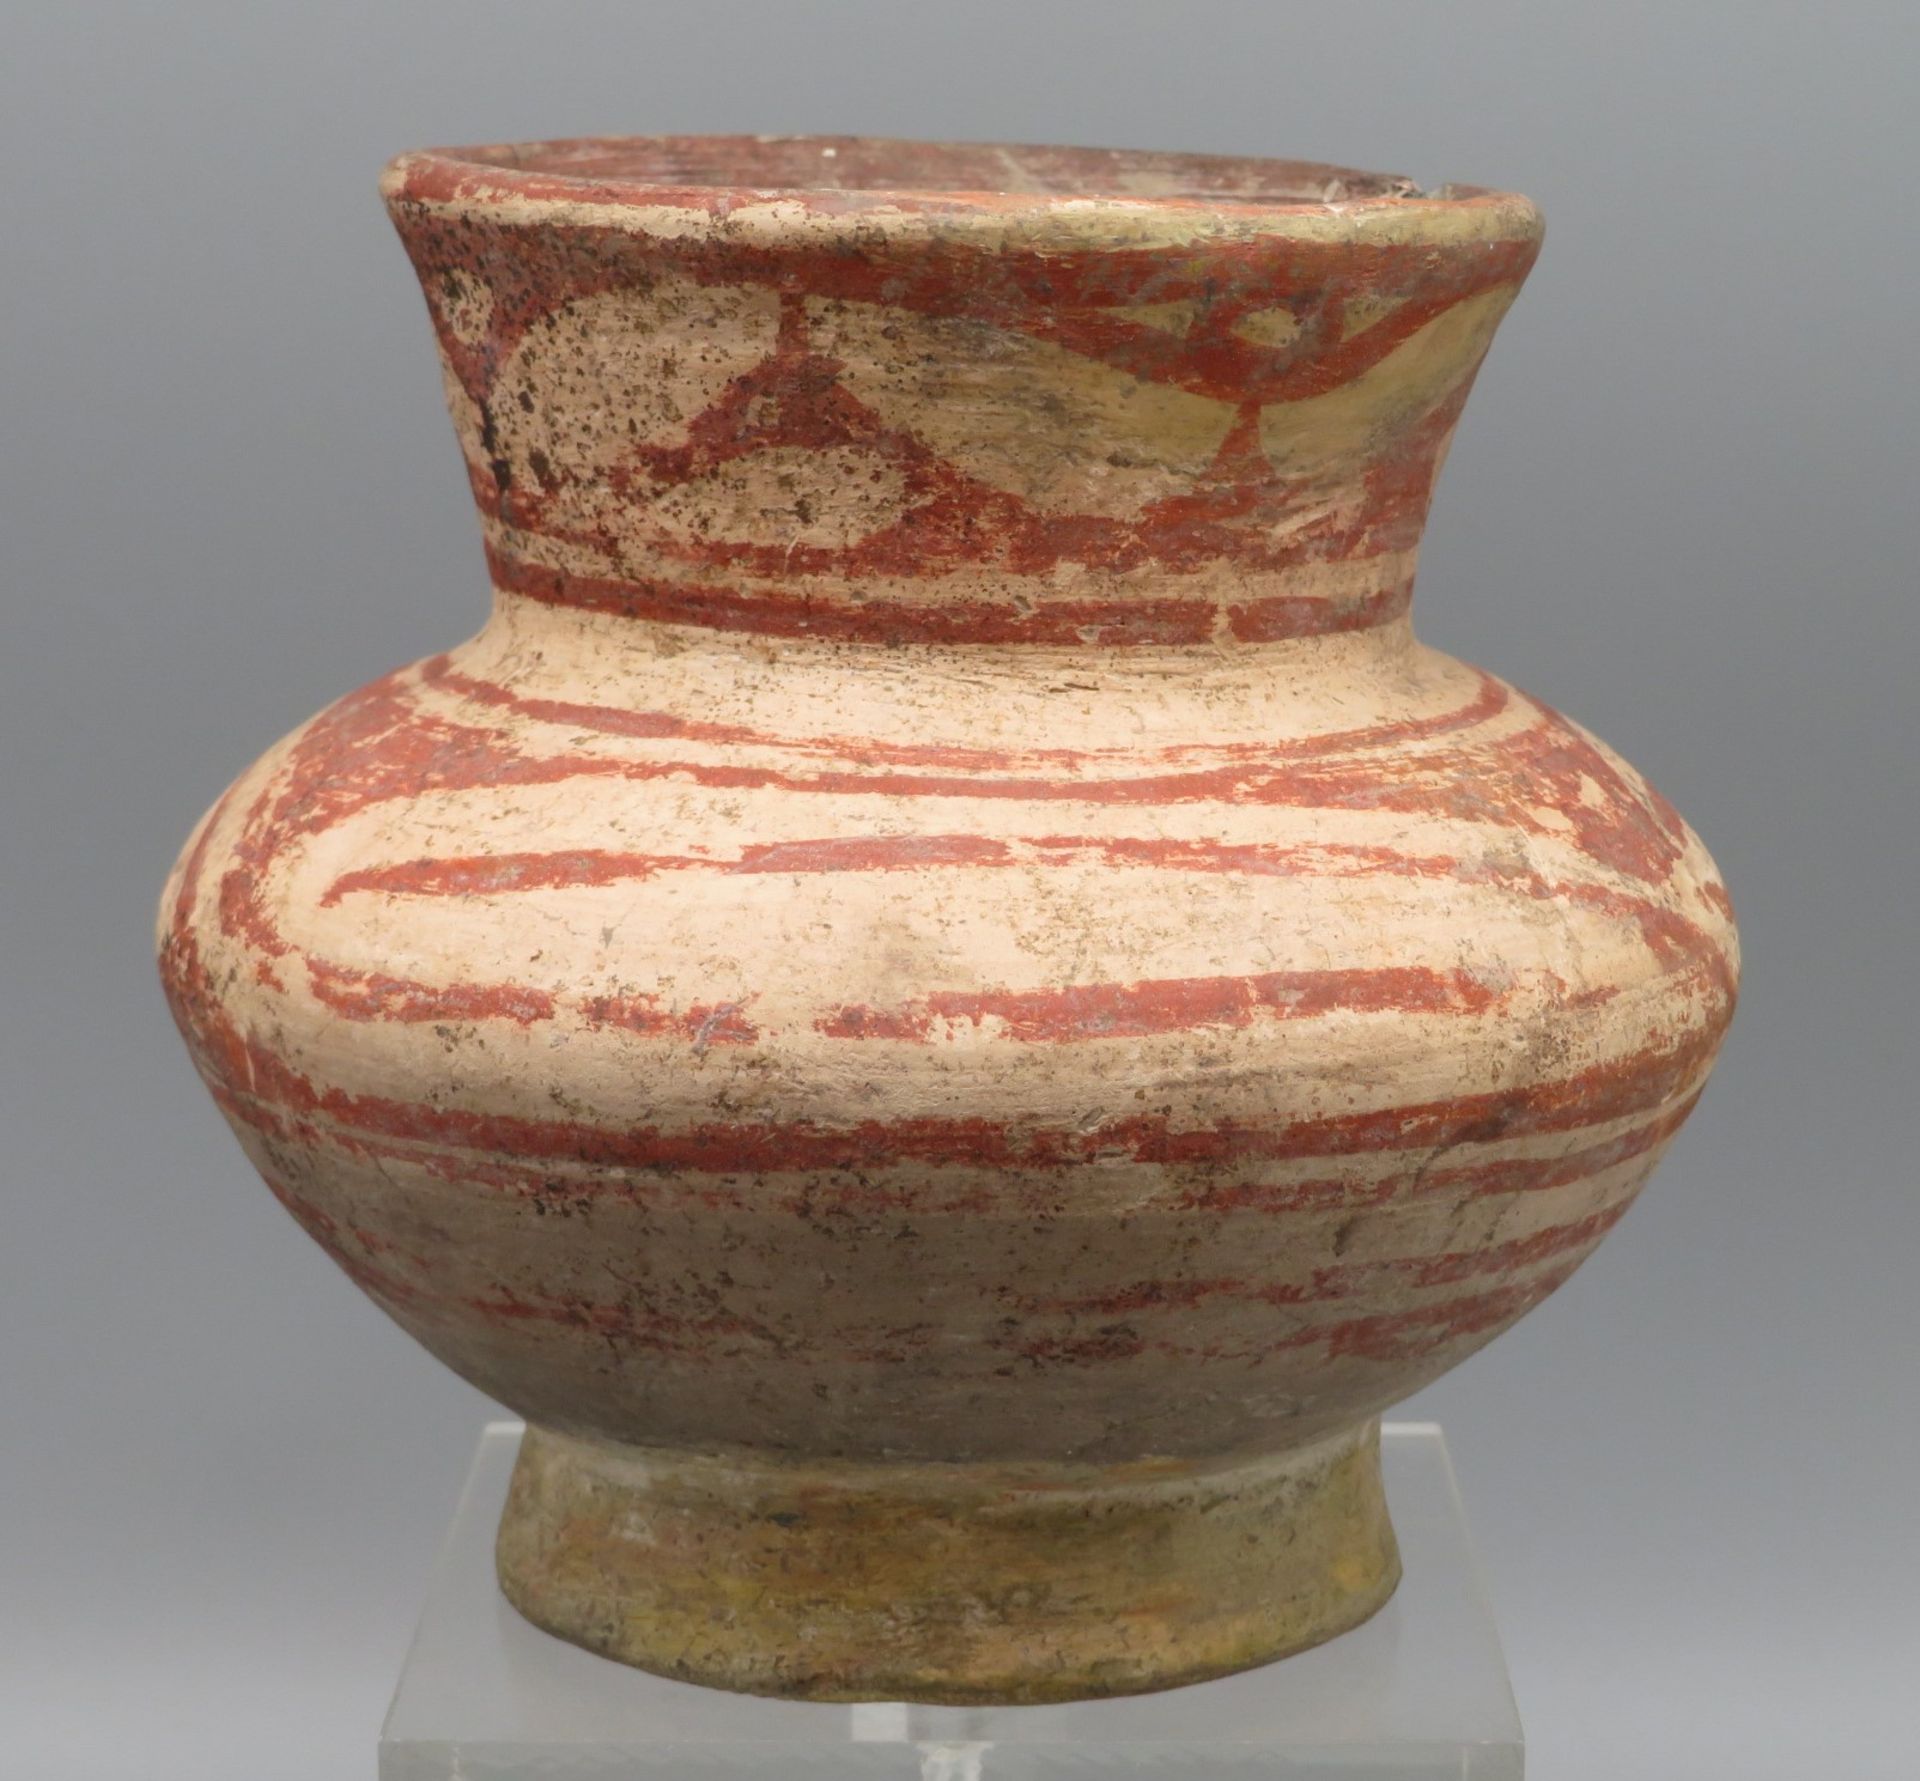 Bauchiges Gefäß, Thailand, Ban Chiang, antik, Keramik mit eisenroter Bemalung, im Brand orange-rot  - Bild 2 aus 3